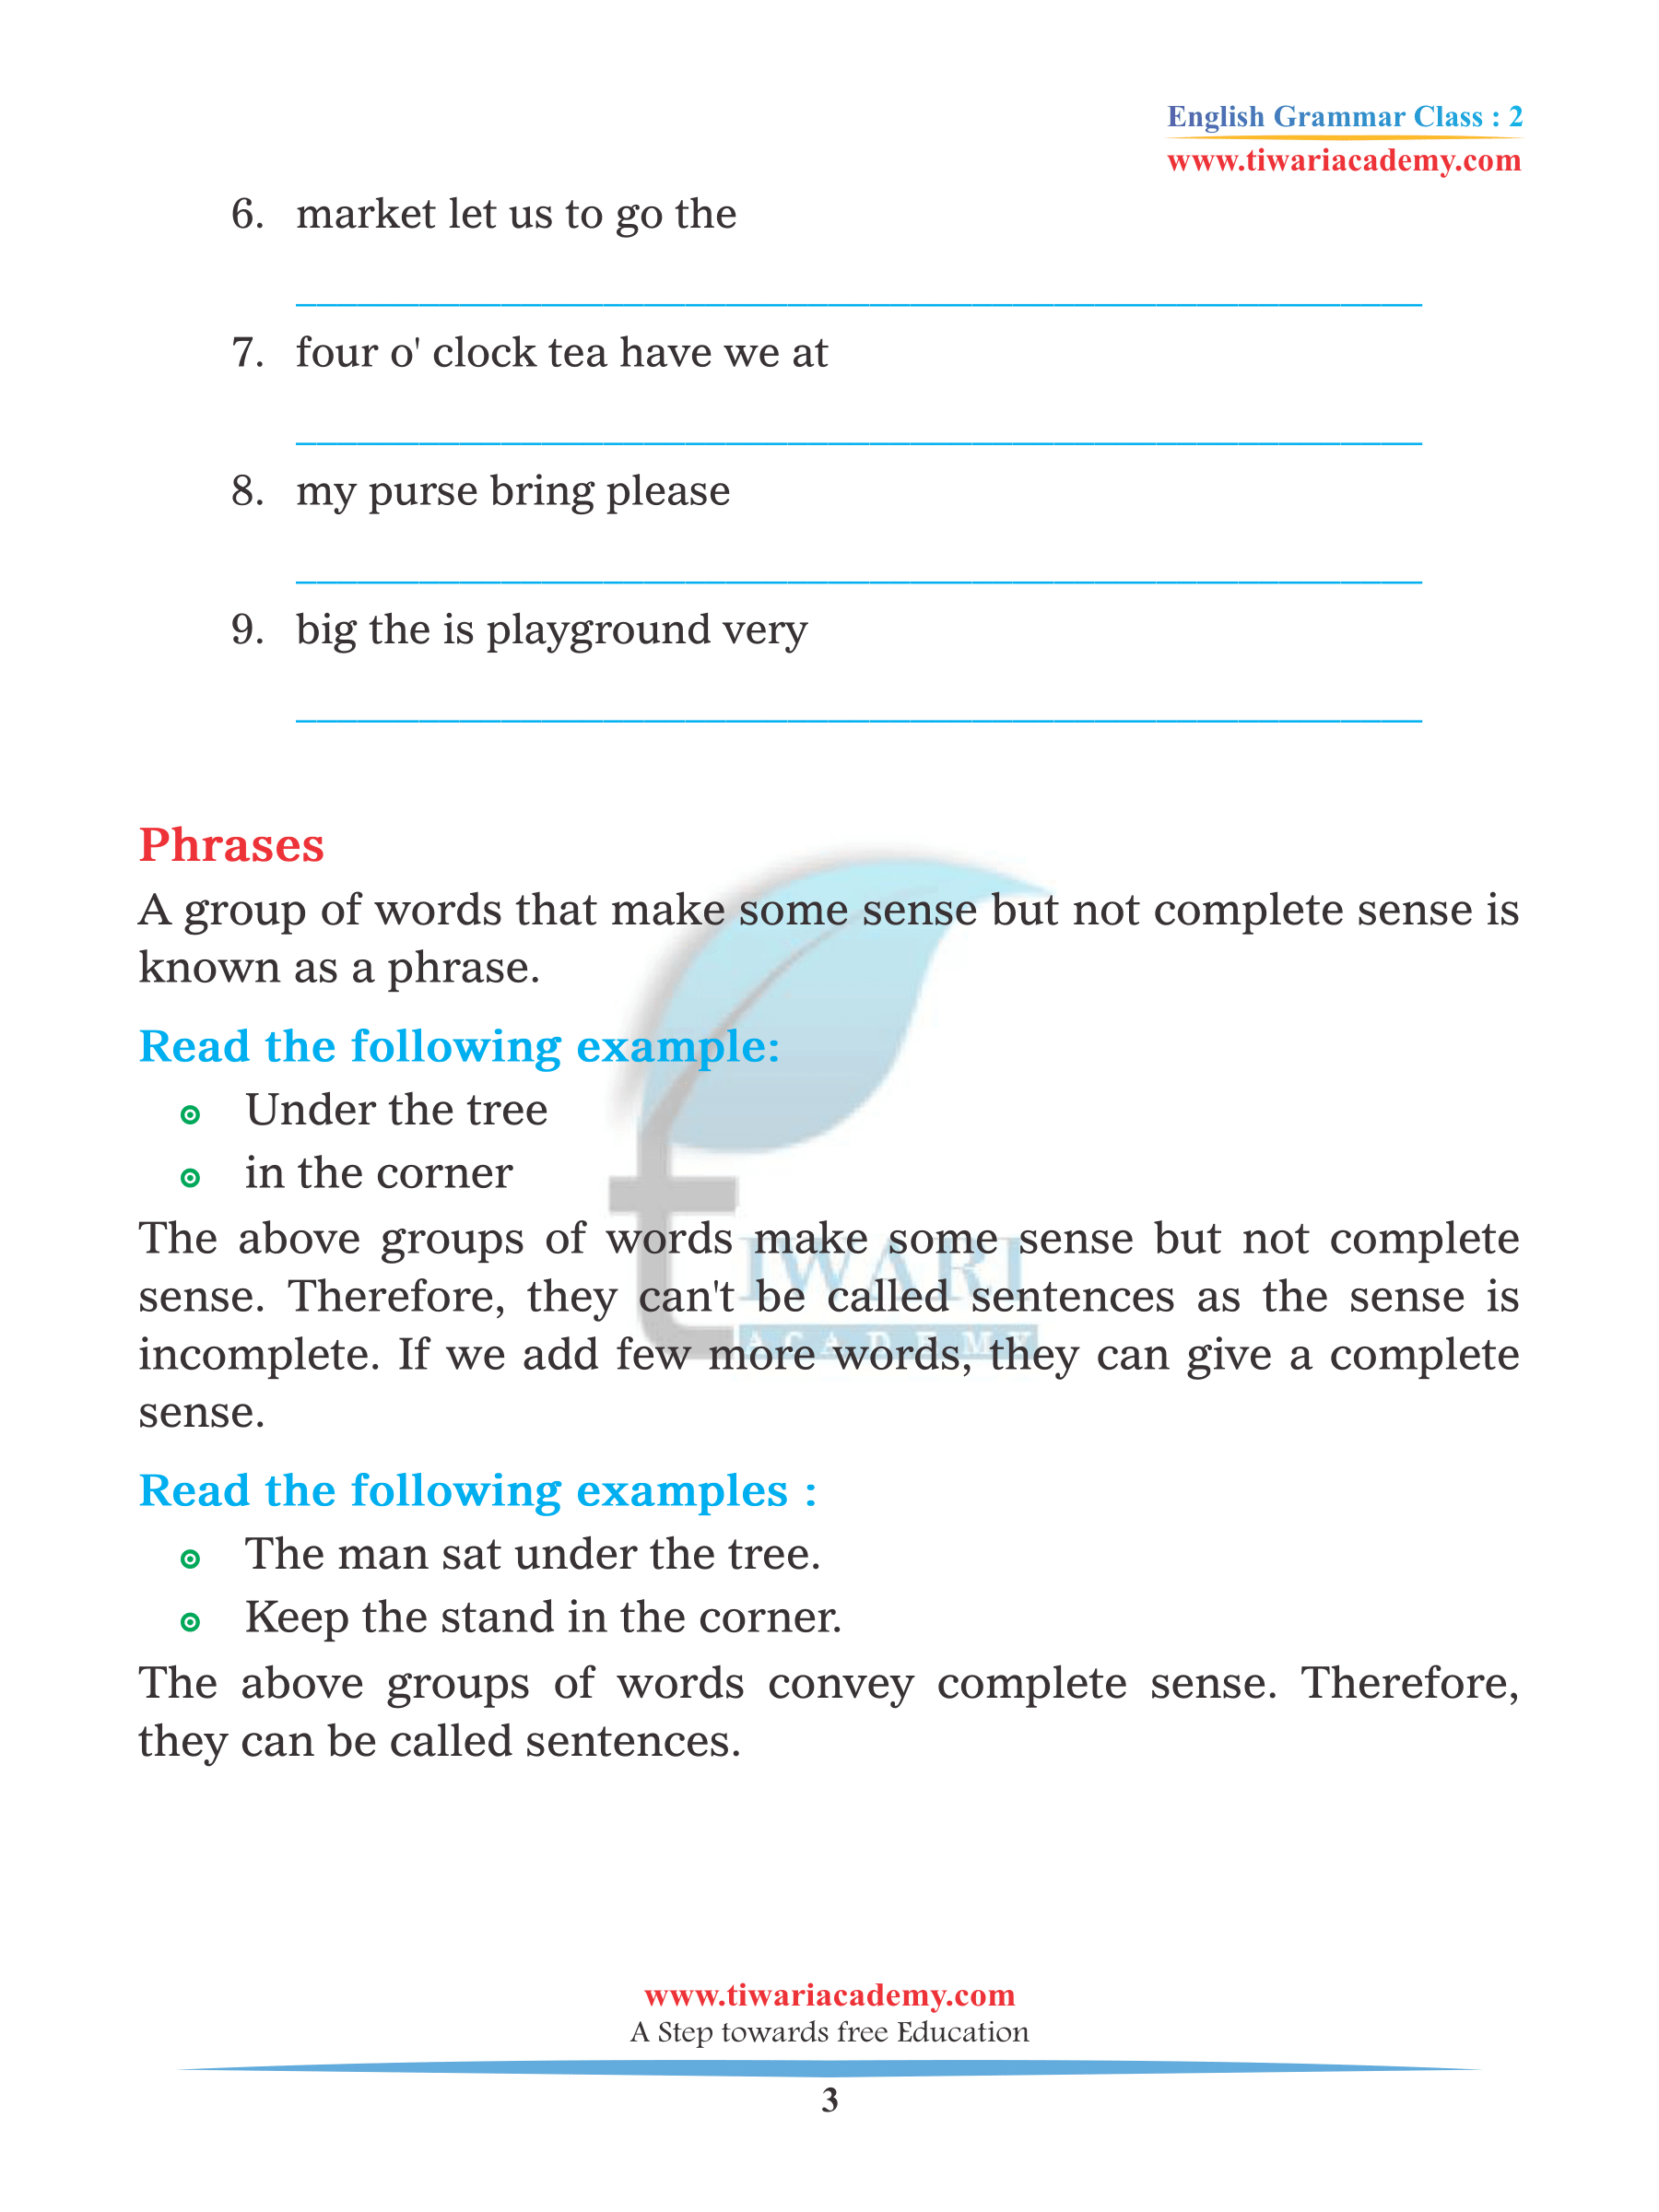 Sentence and Phrase practice in Grade 2 Grammar